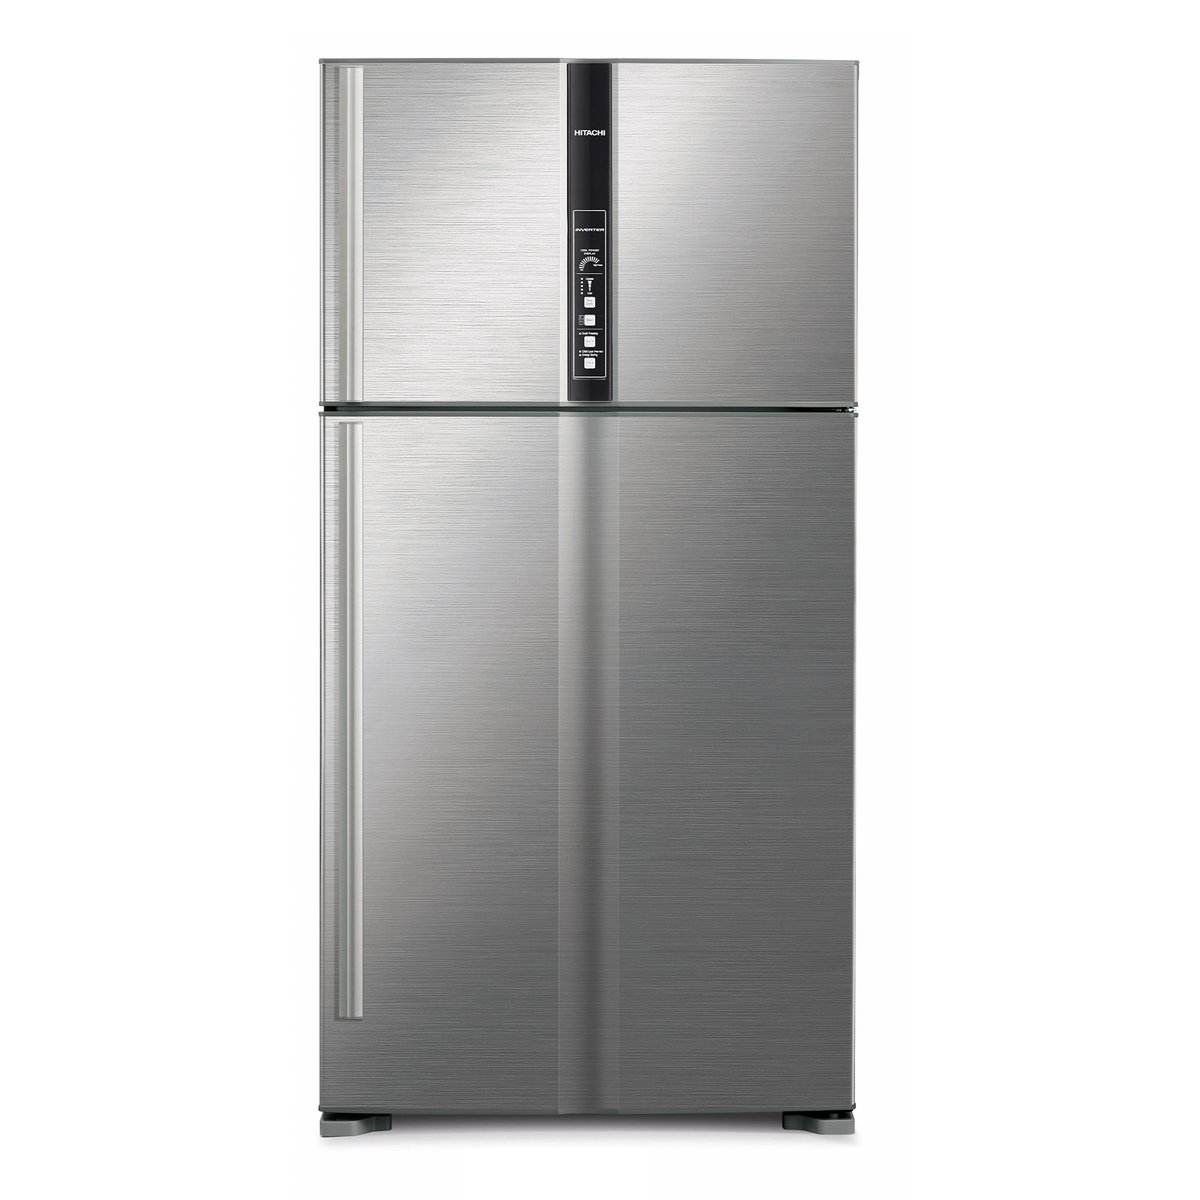 Hitachi Double Door Refrigerator RV820PUK1KBSL 820LTR